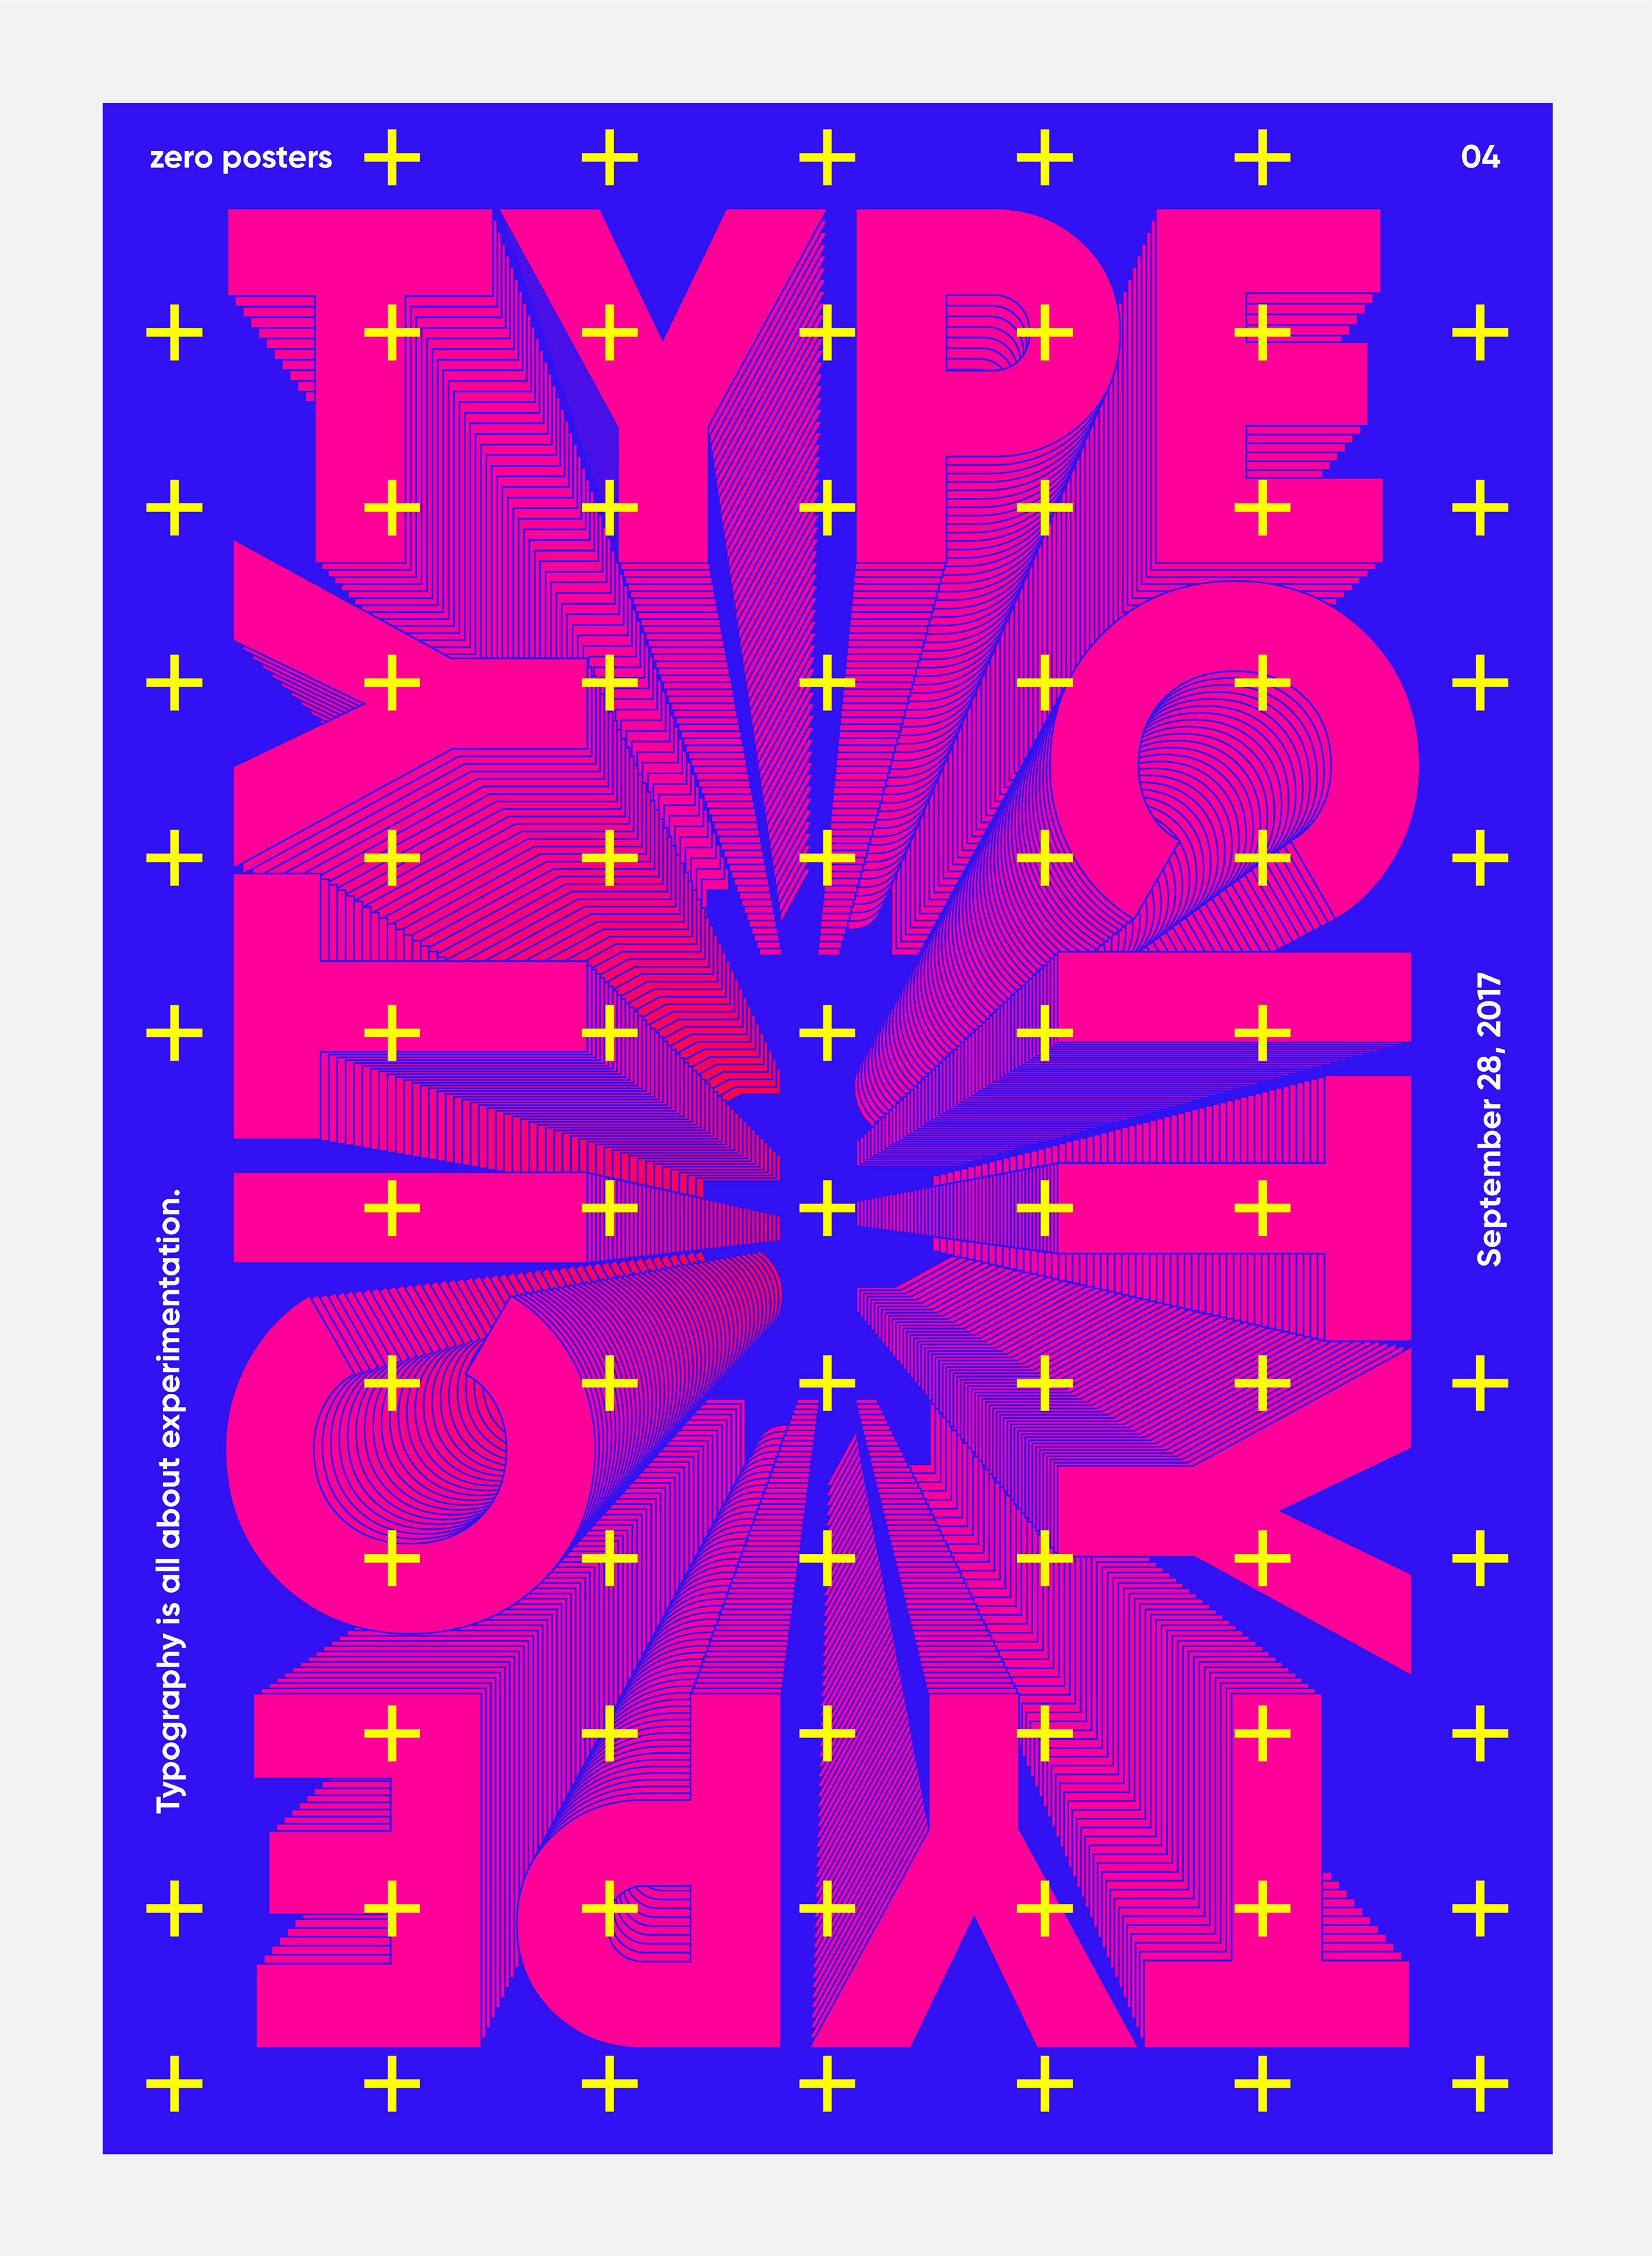 Experimental Poster Designs: Zero Posters Vol.1